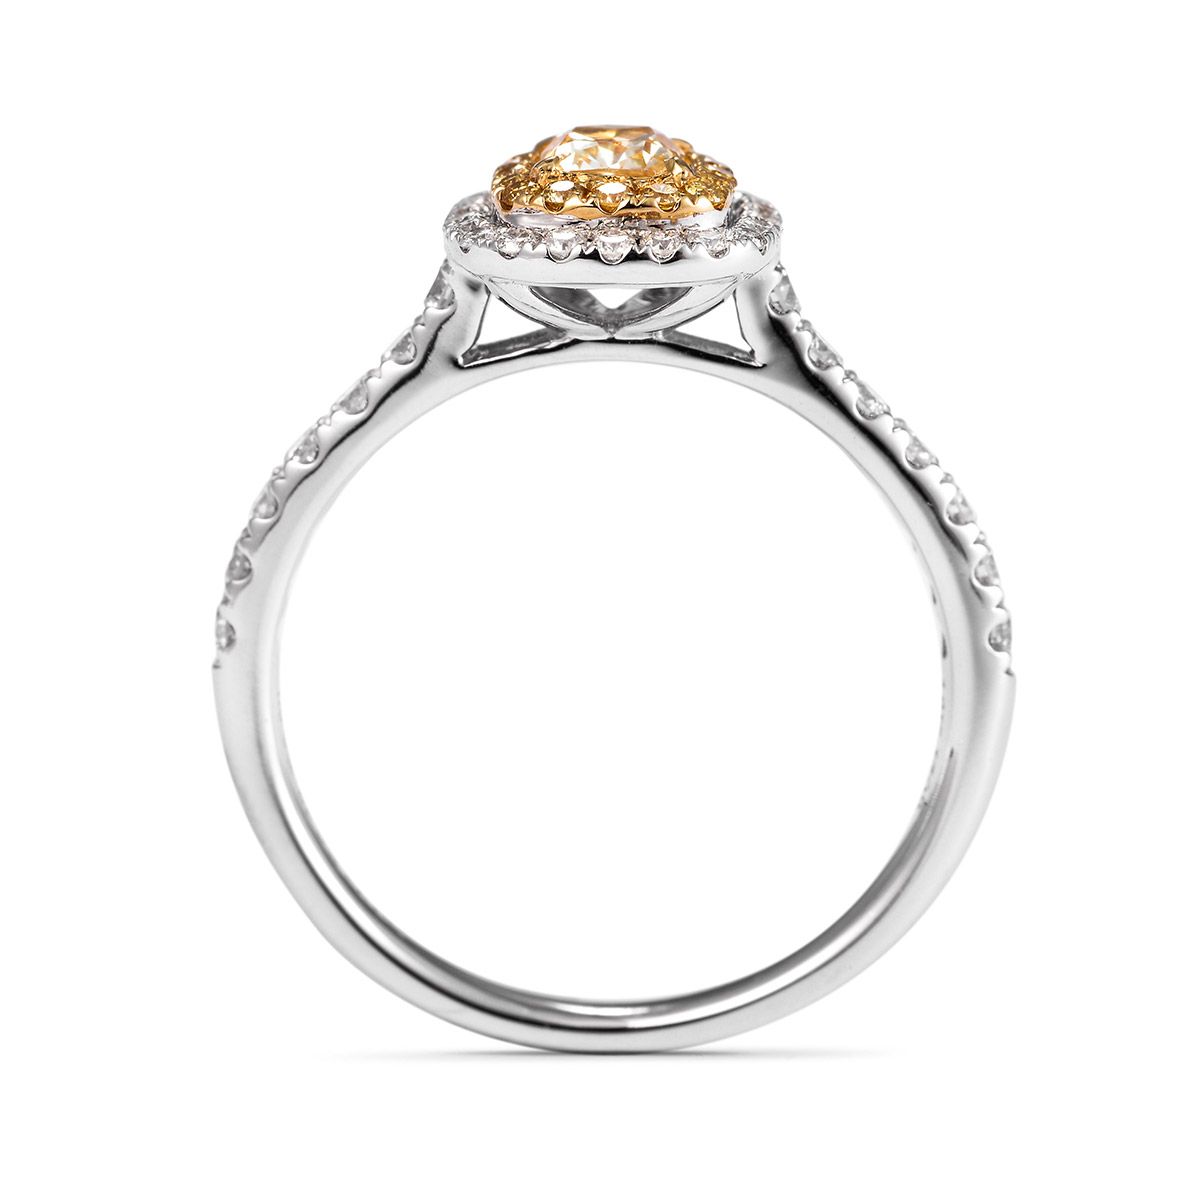 Fancy Yellow Diamond Ring, 0.75 Ct. TW, Cushion shape